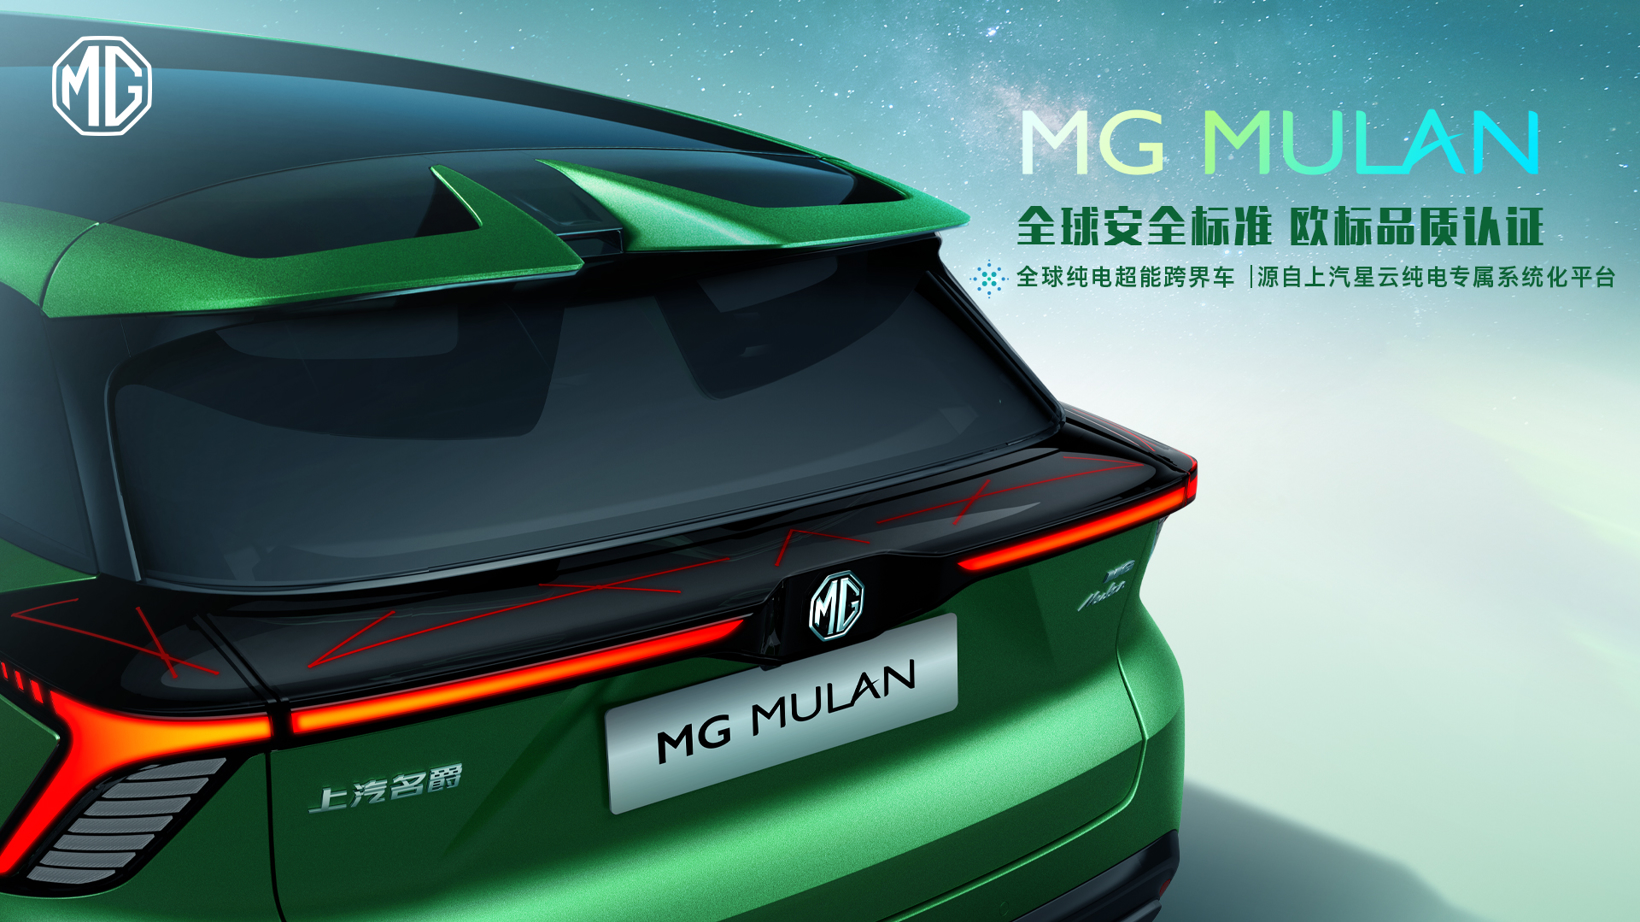 MG MULAN技术首次解密：“魔方”电池/星云纯电平台